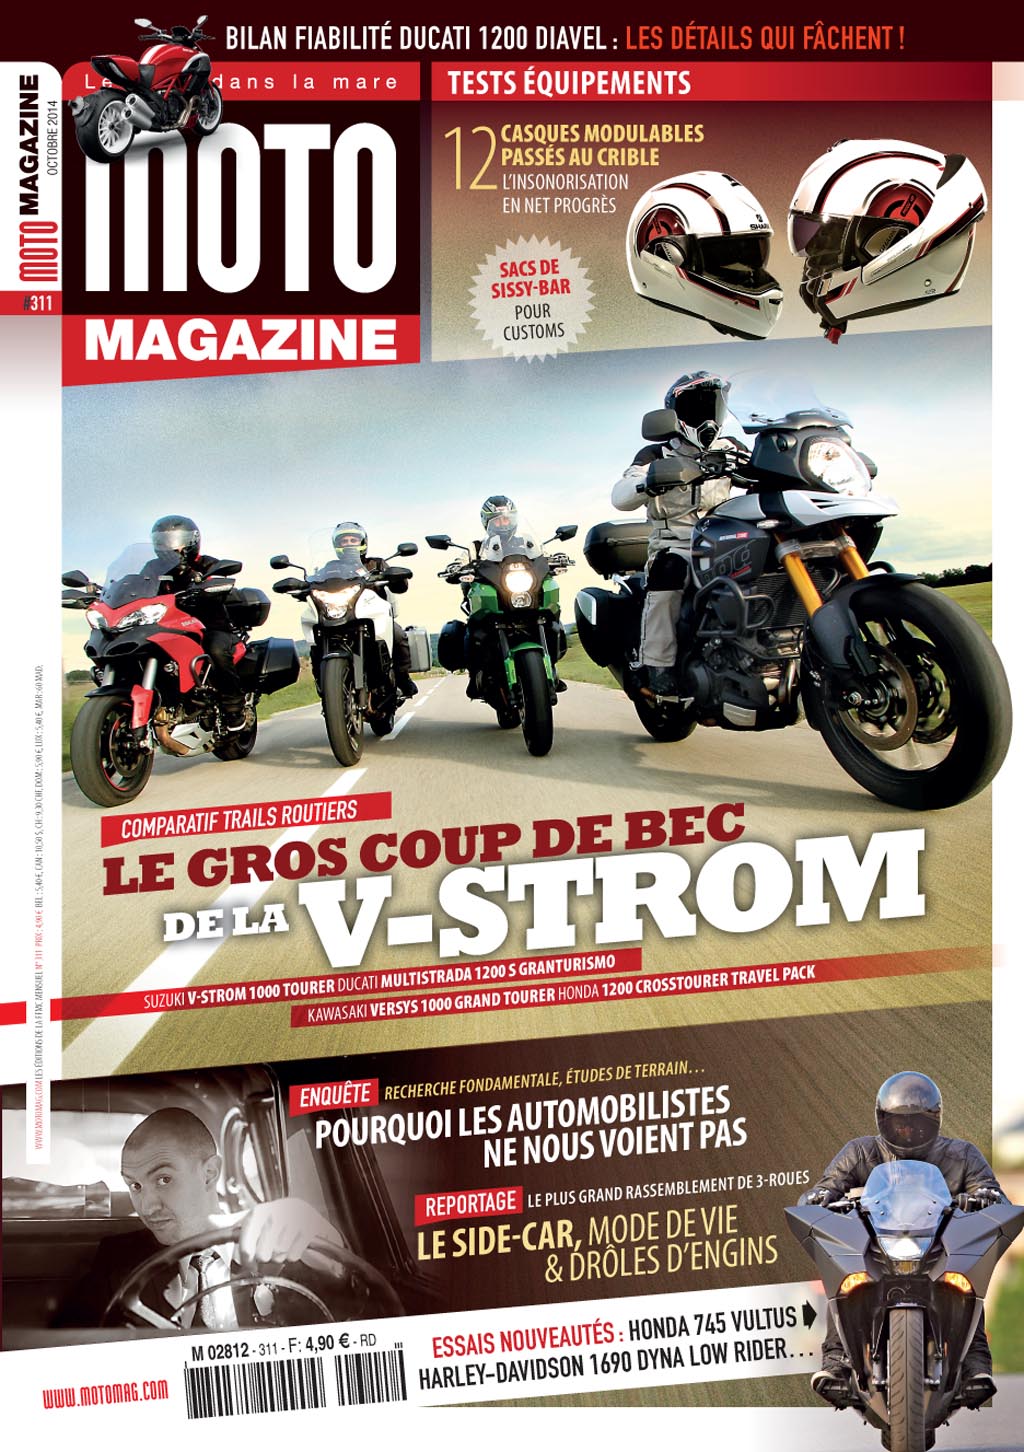 En kiosque : Moto Magazine #311 (octobre 2014) vient de (...)